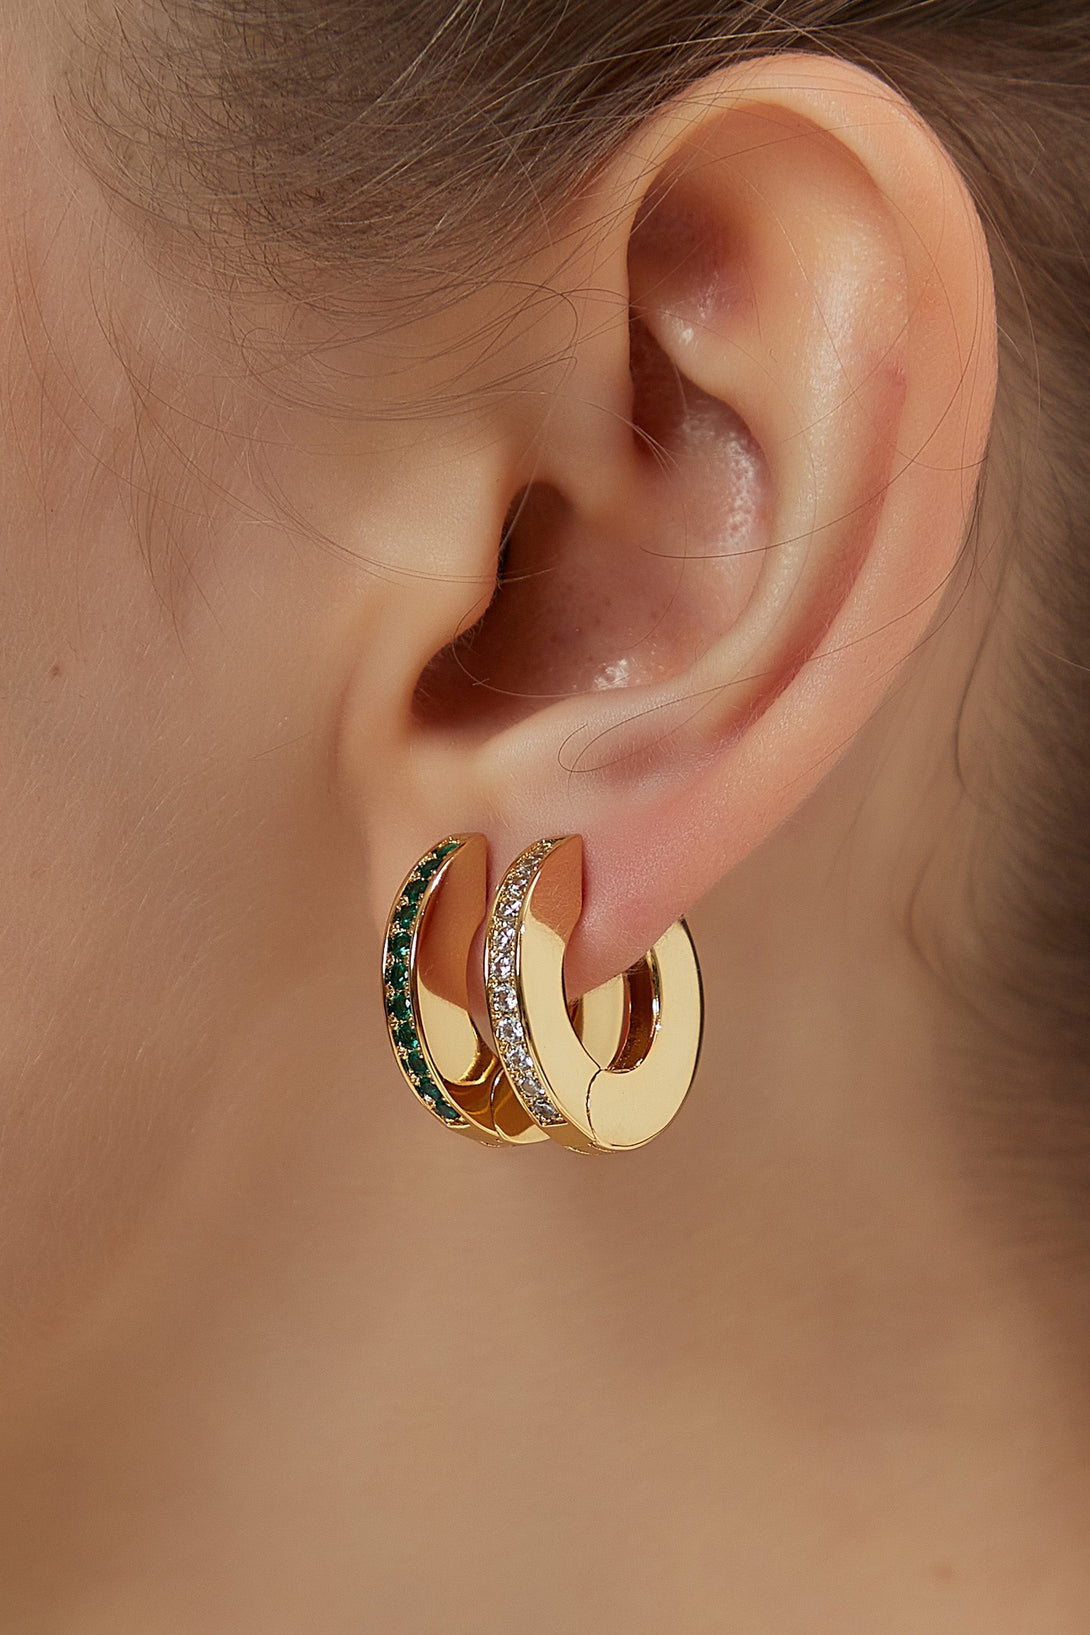 Adara Emerald Cubic Zirconia Hoop Earrings - Classicharms